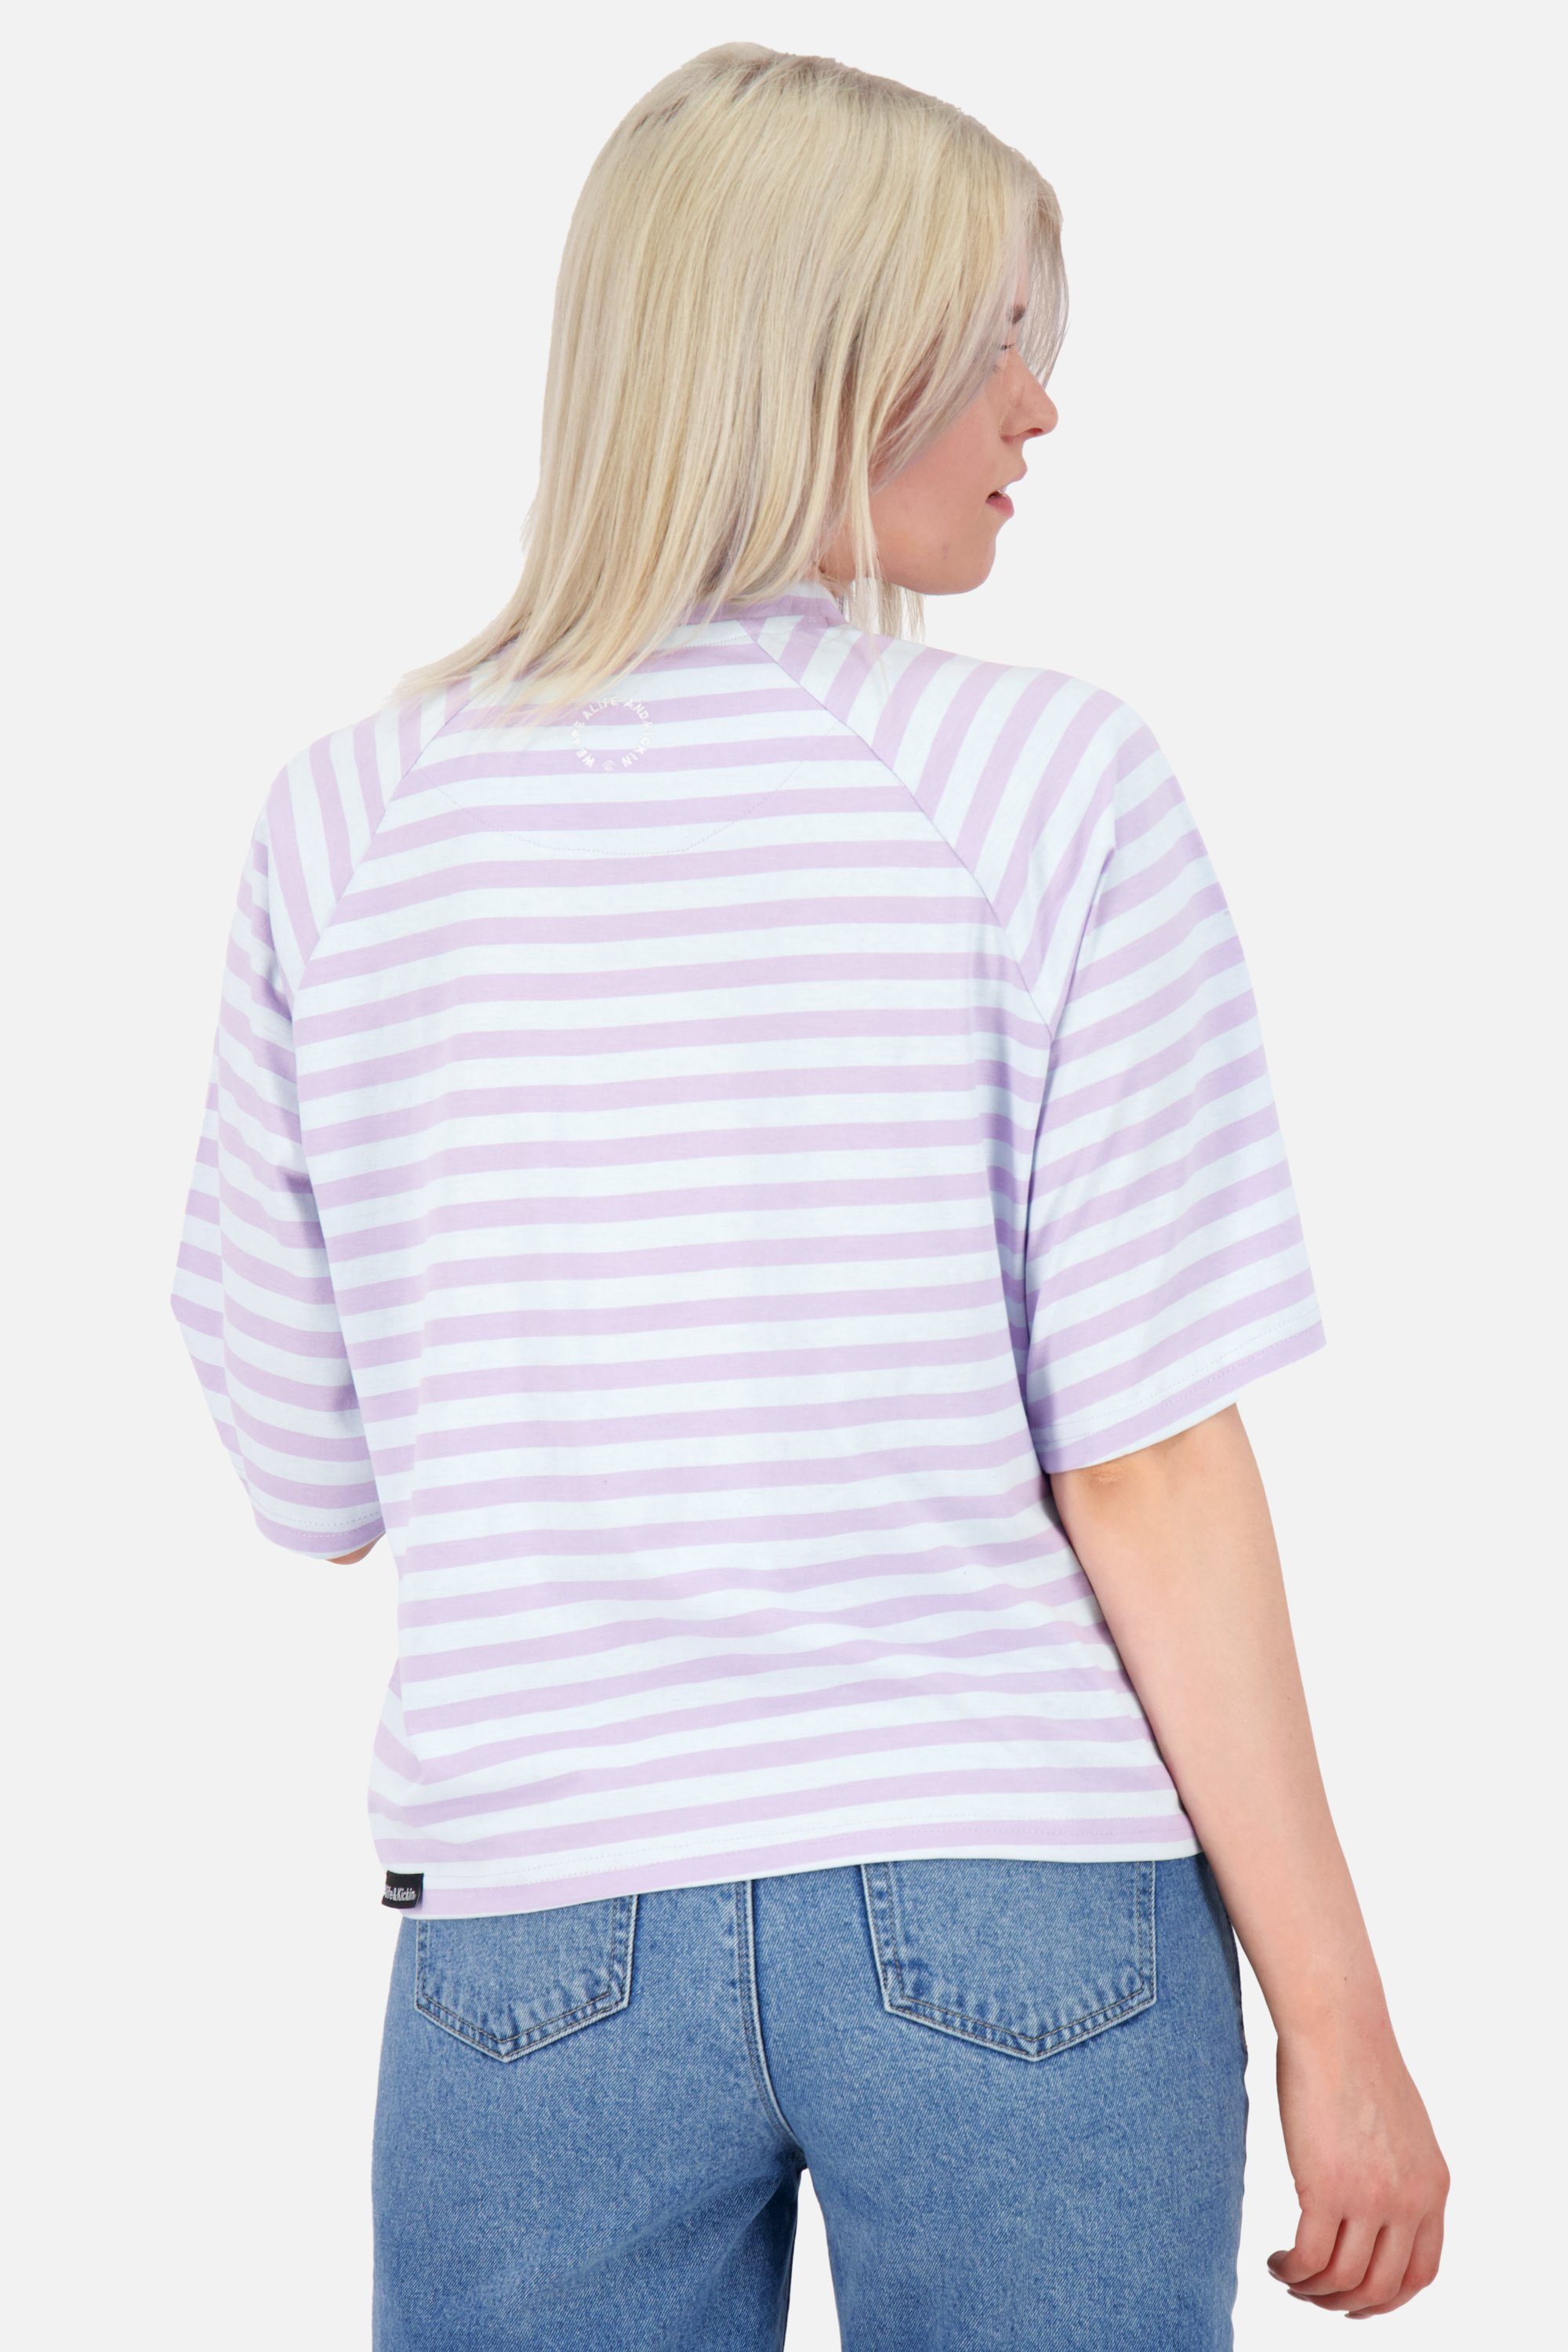 & RubyAK Shirt lavender Alife Kickin Z digital Kurzarmshirt, Rundhalsshirt Damen Shirt